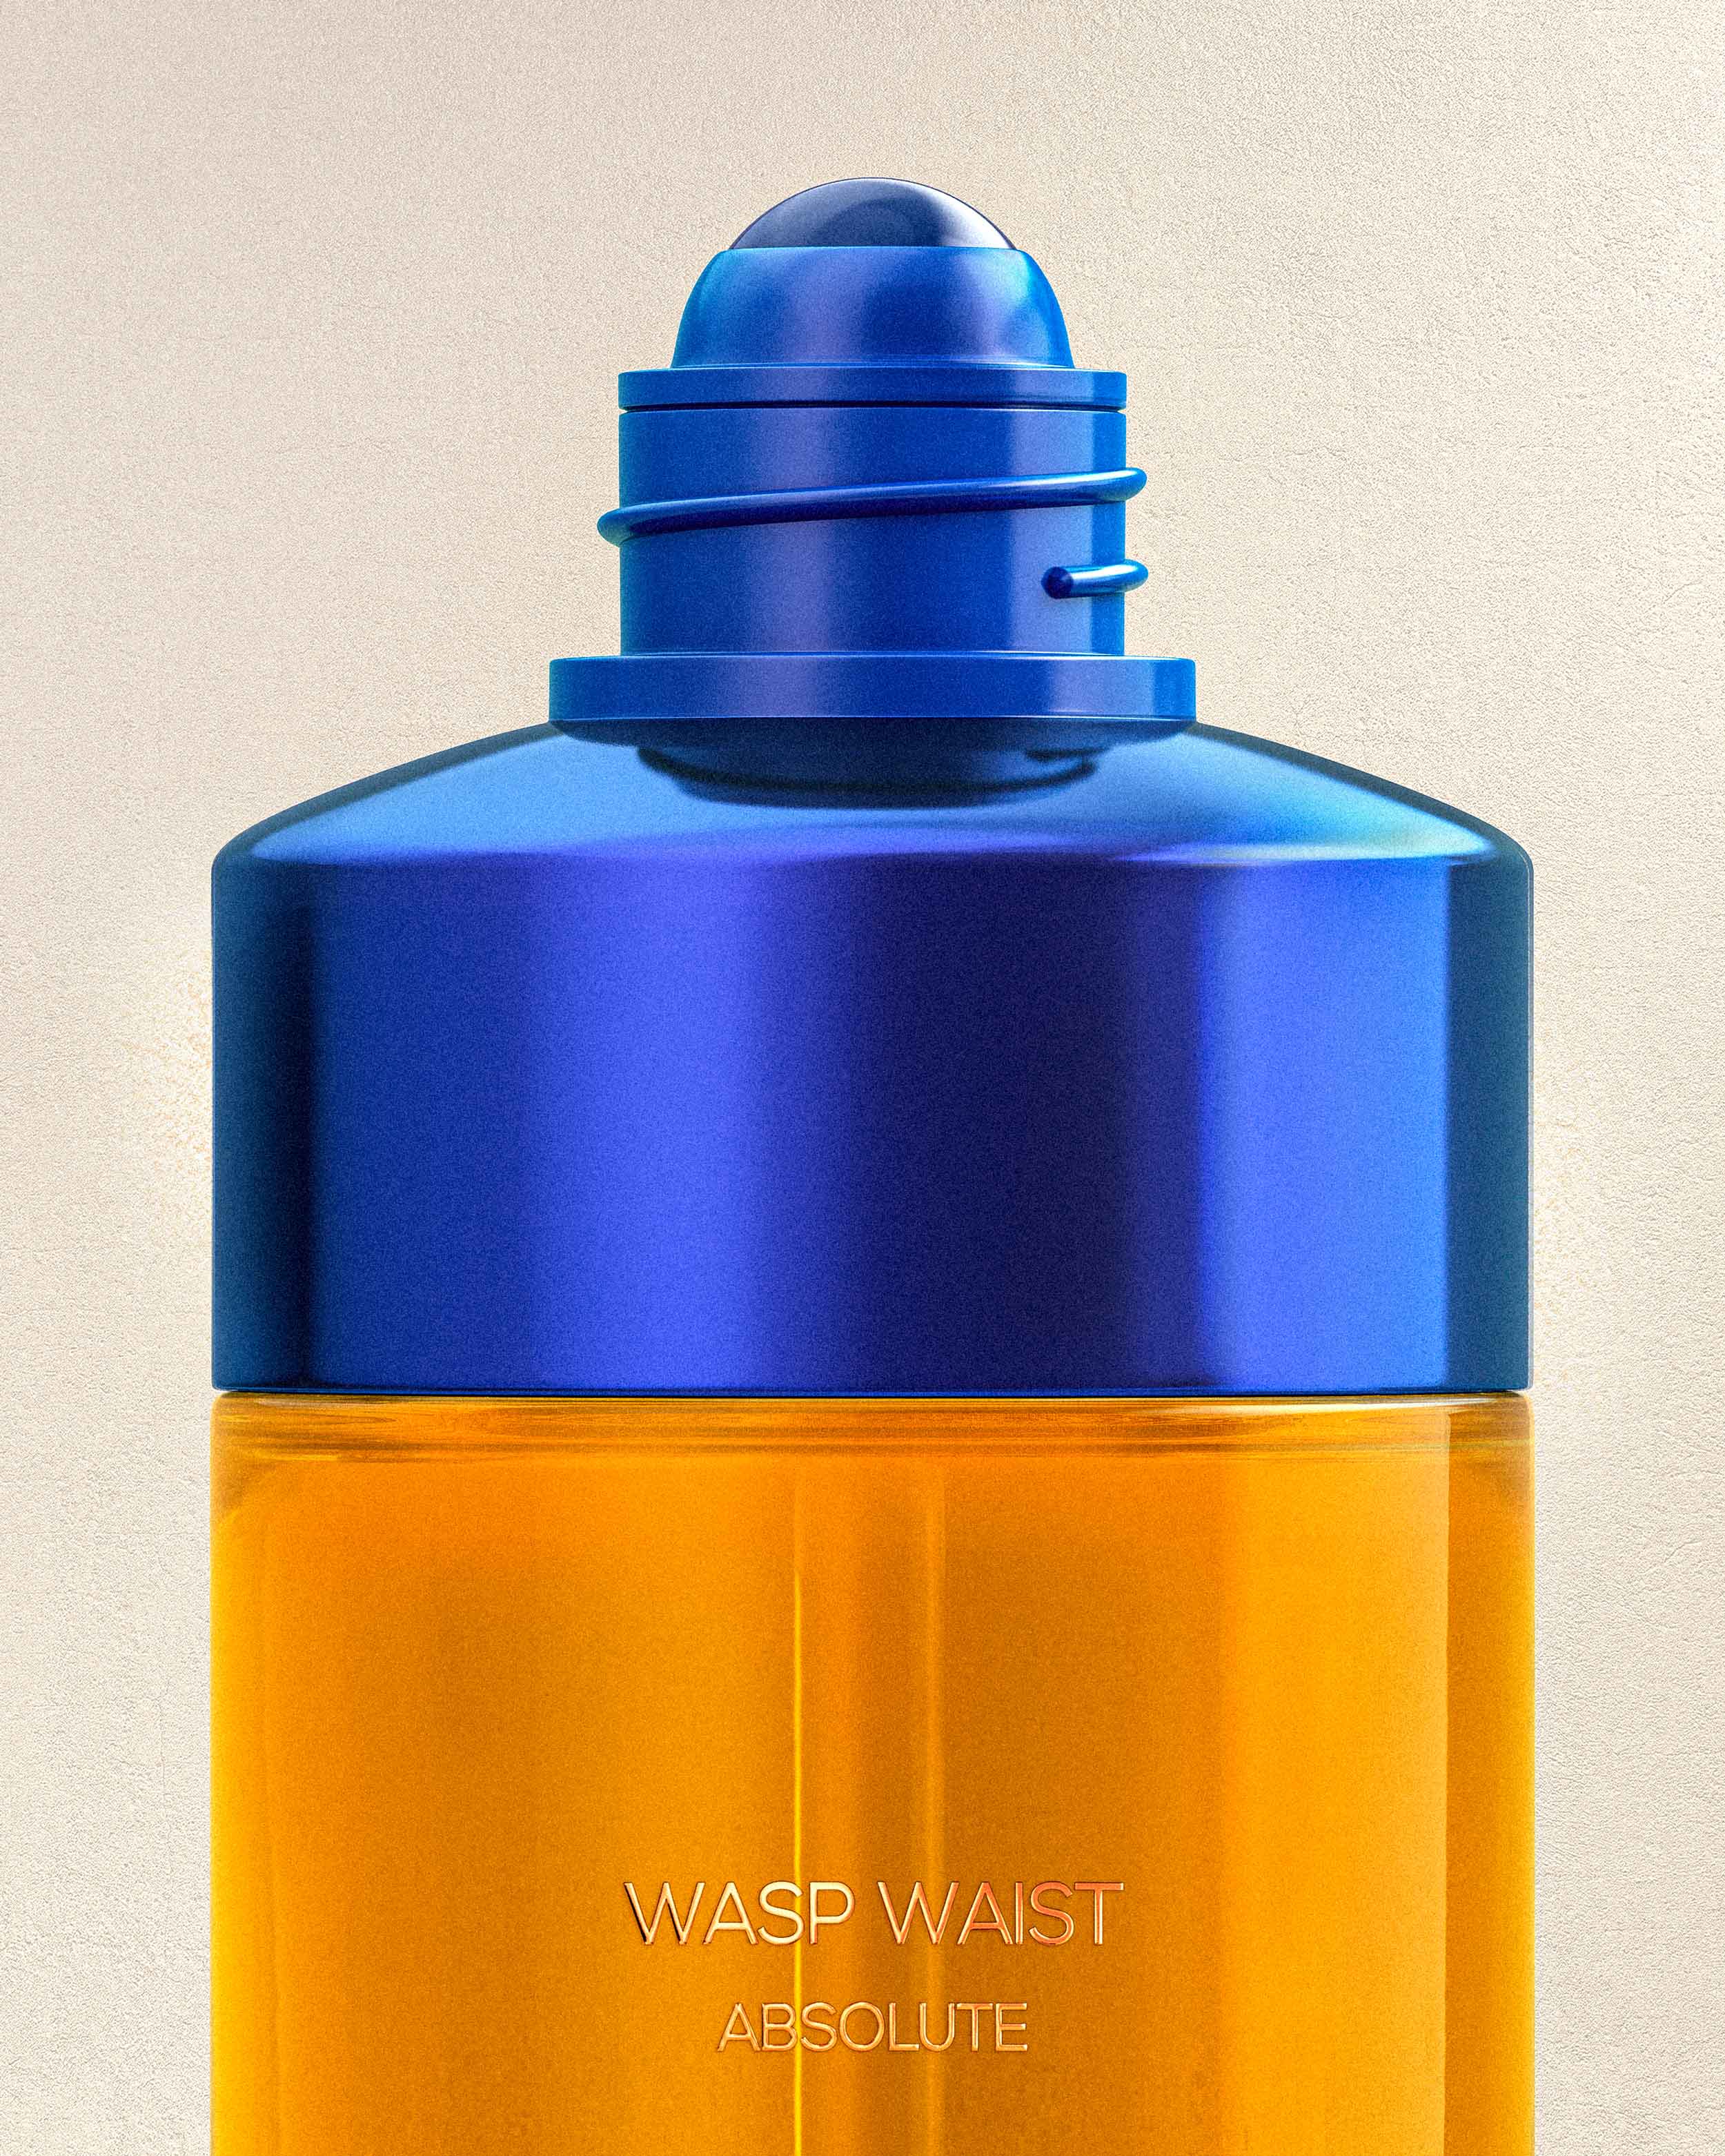 OJAR Absolute Wasp Waist Perfume Roll-on